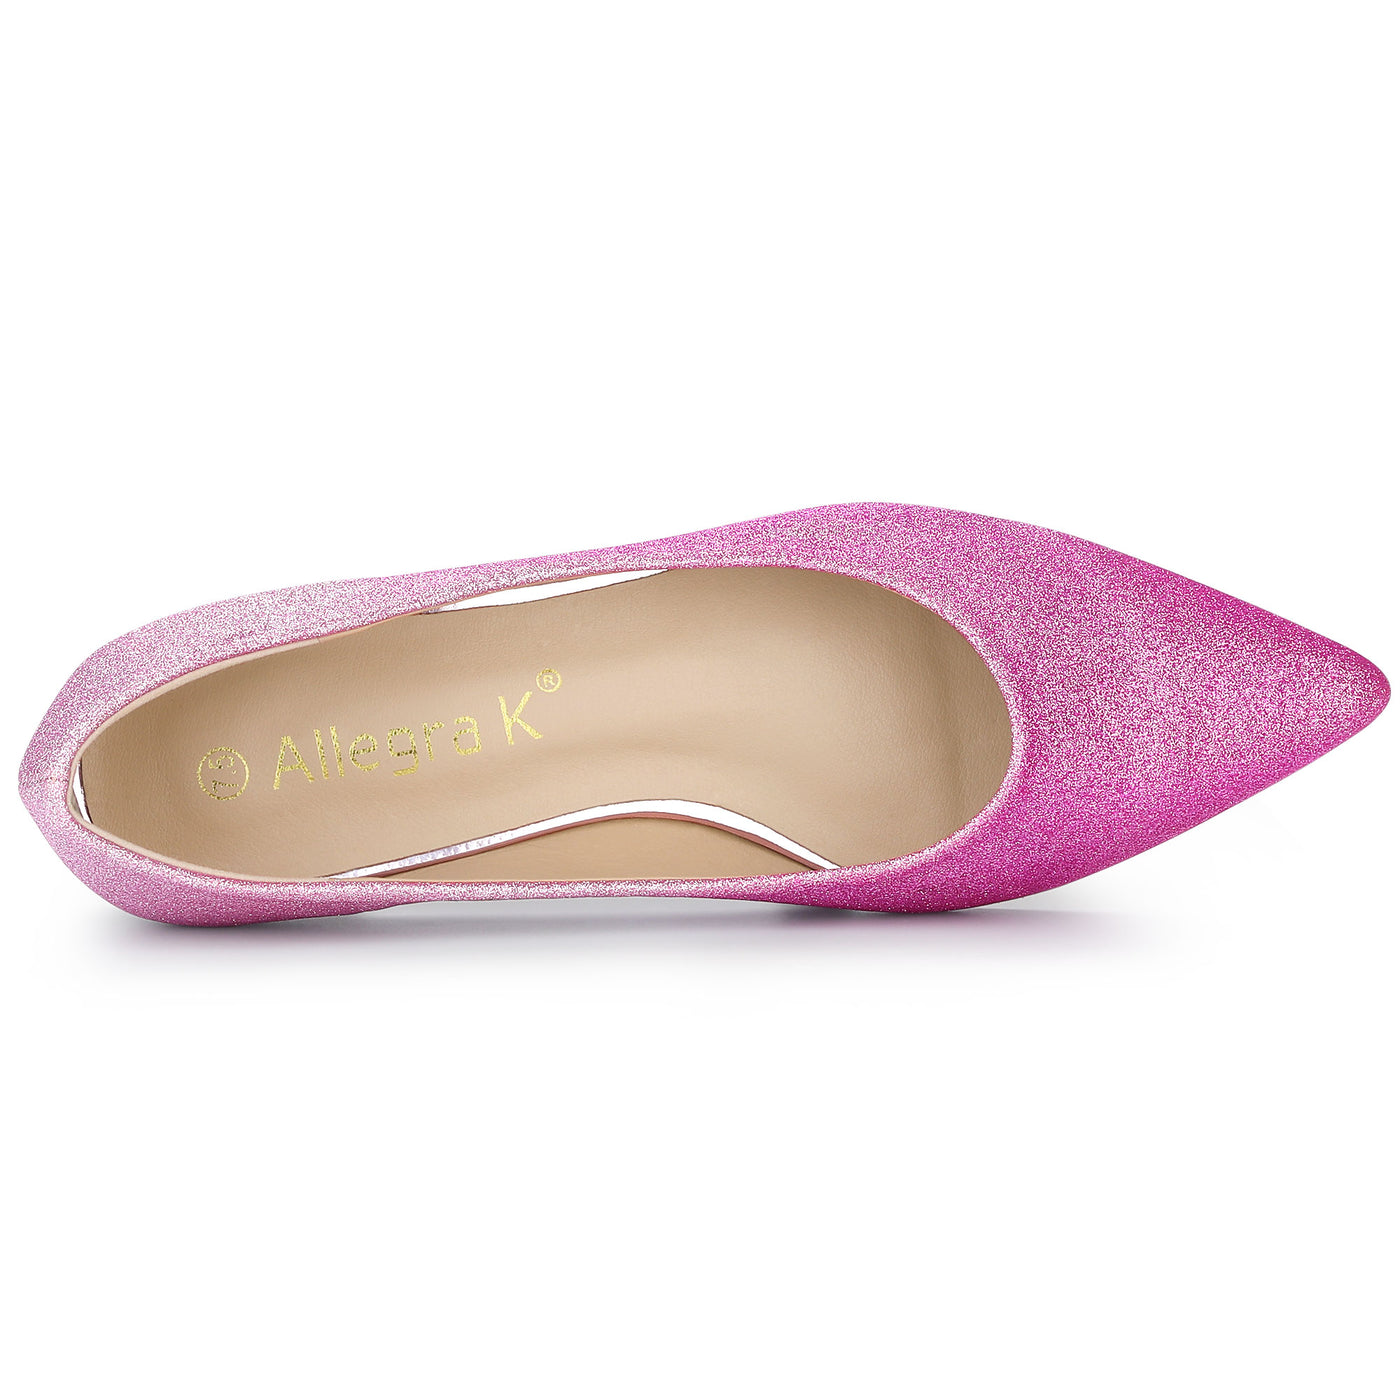 Allegra K Glitter Pointed Toe Ballet Flats Shoes